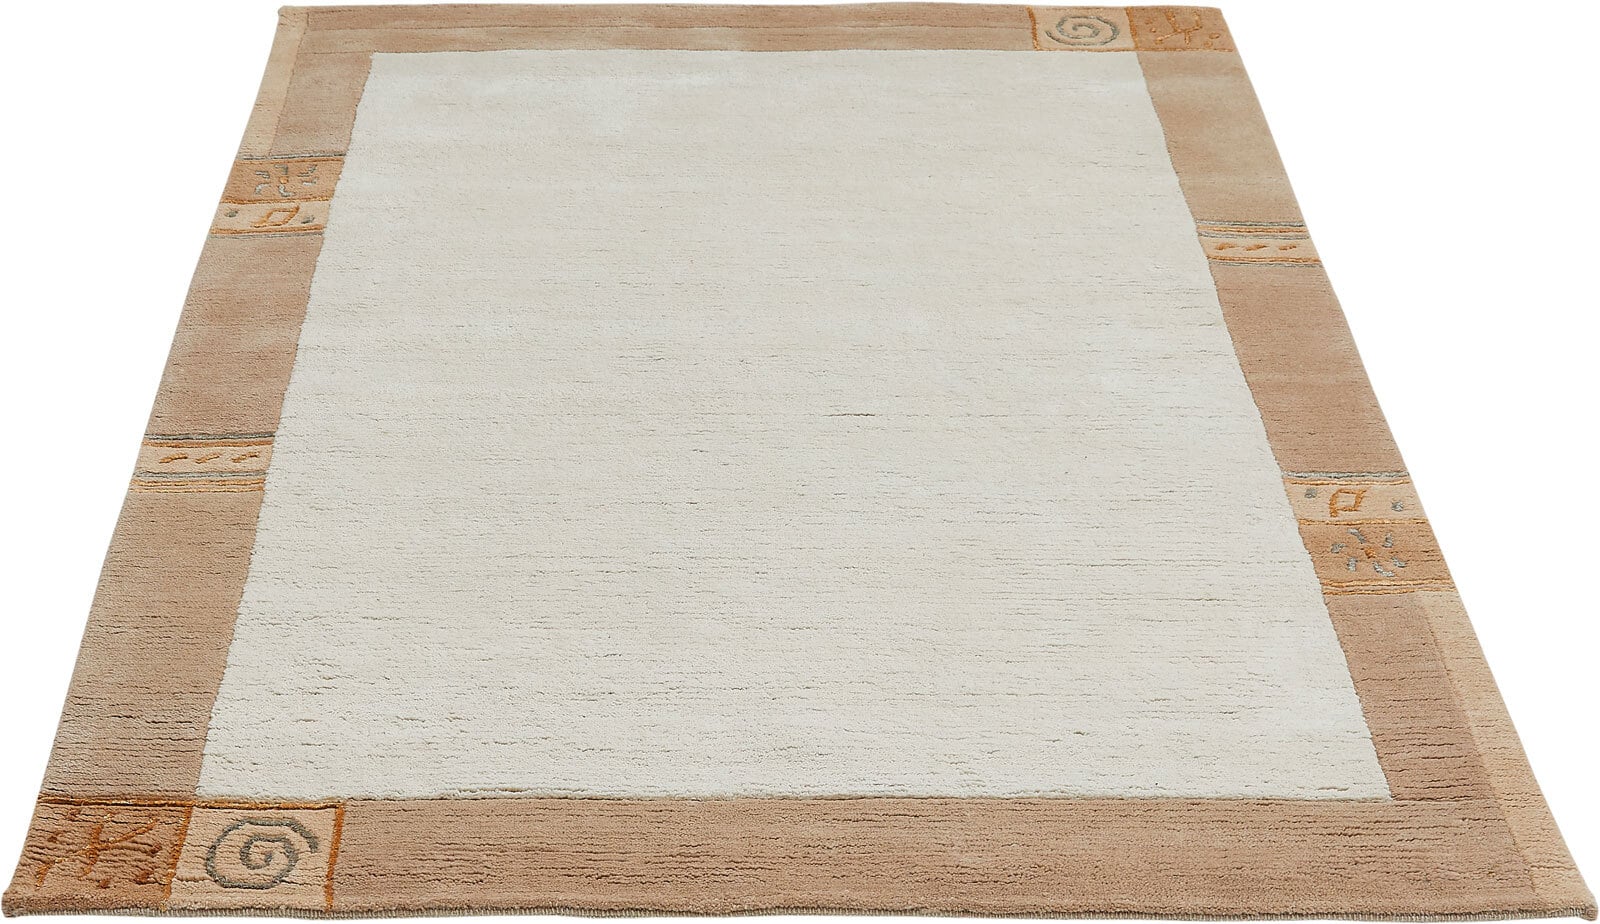 Teppich MANALI 200 x 300 cm beige